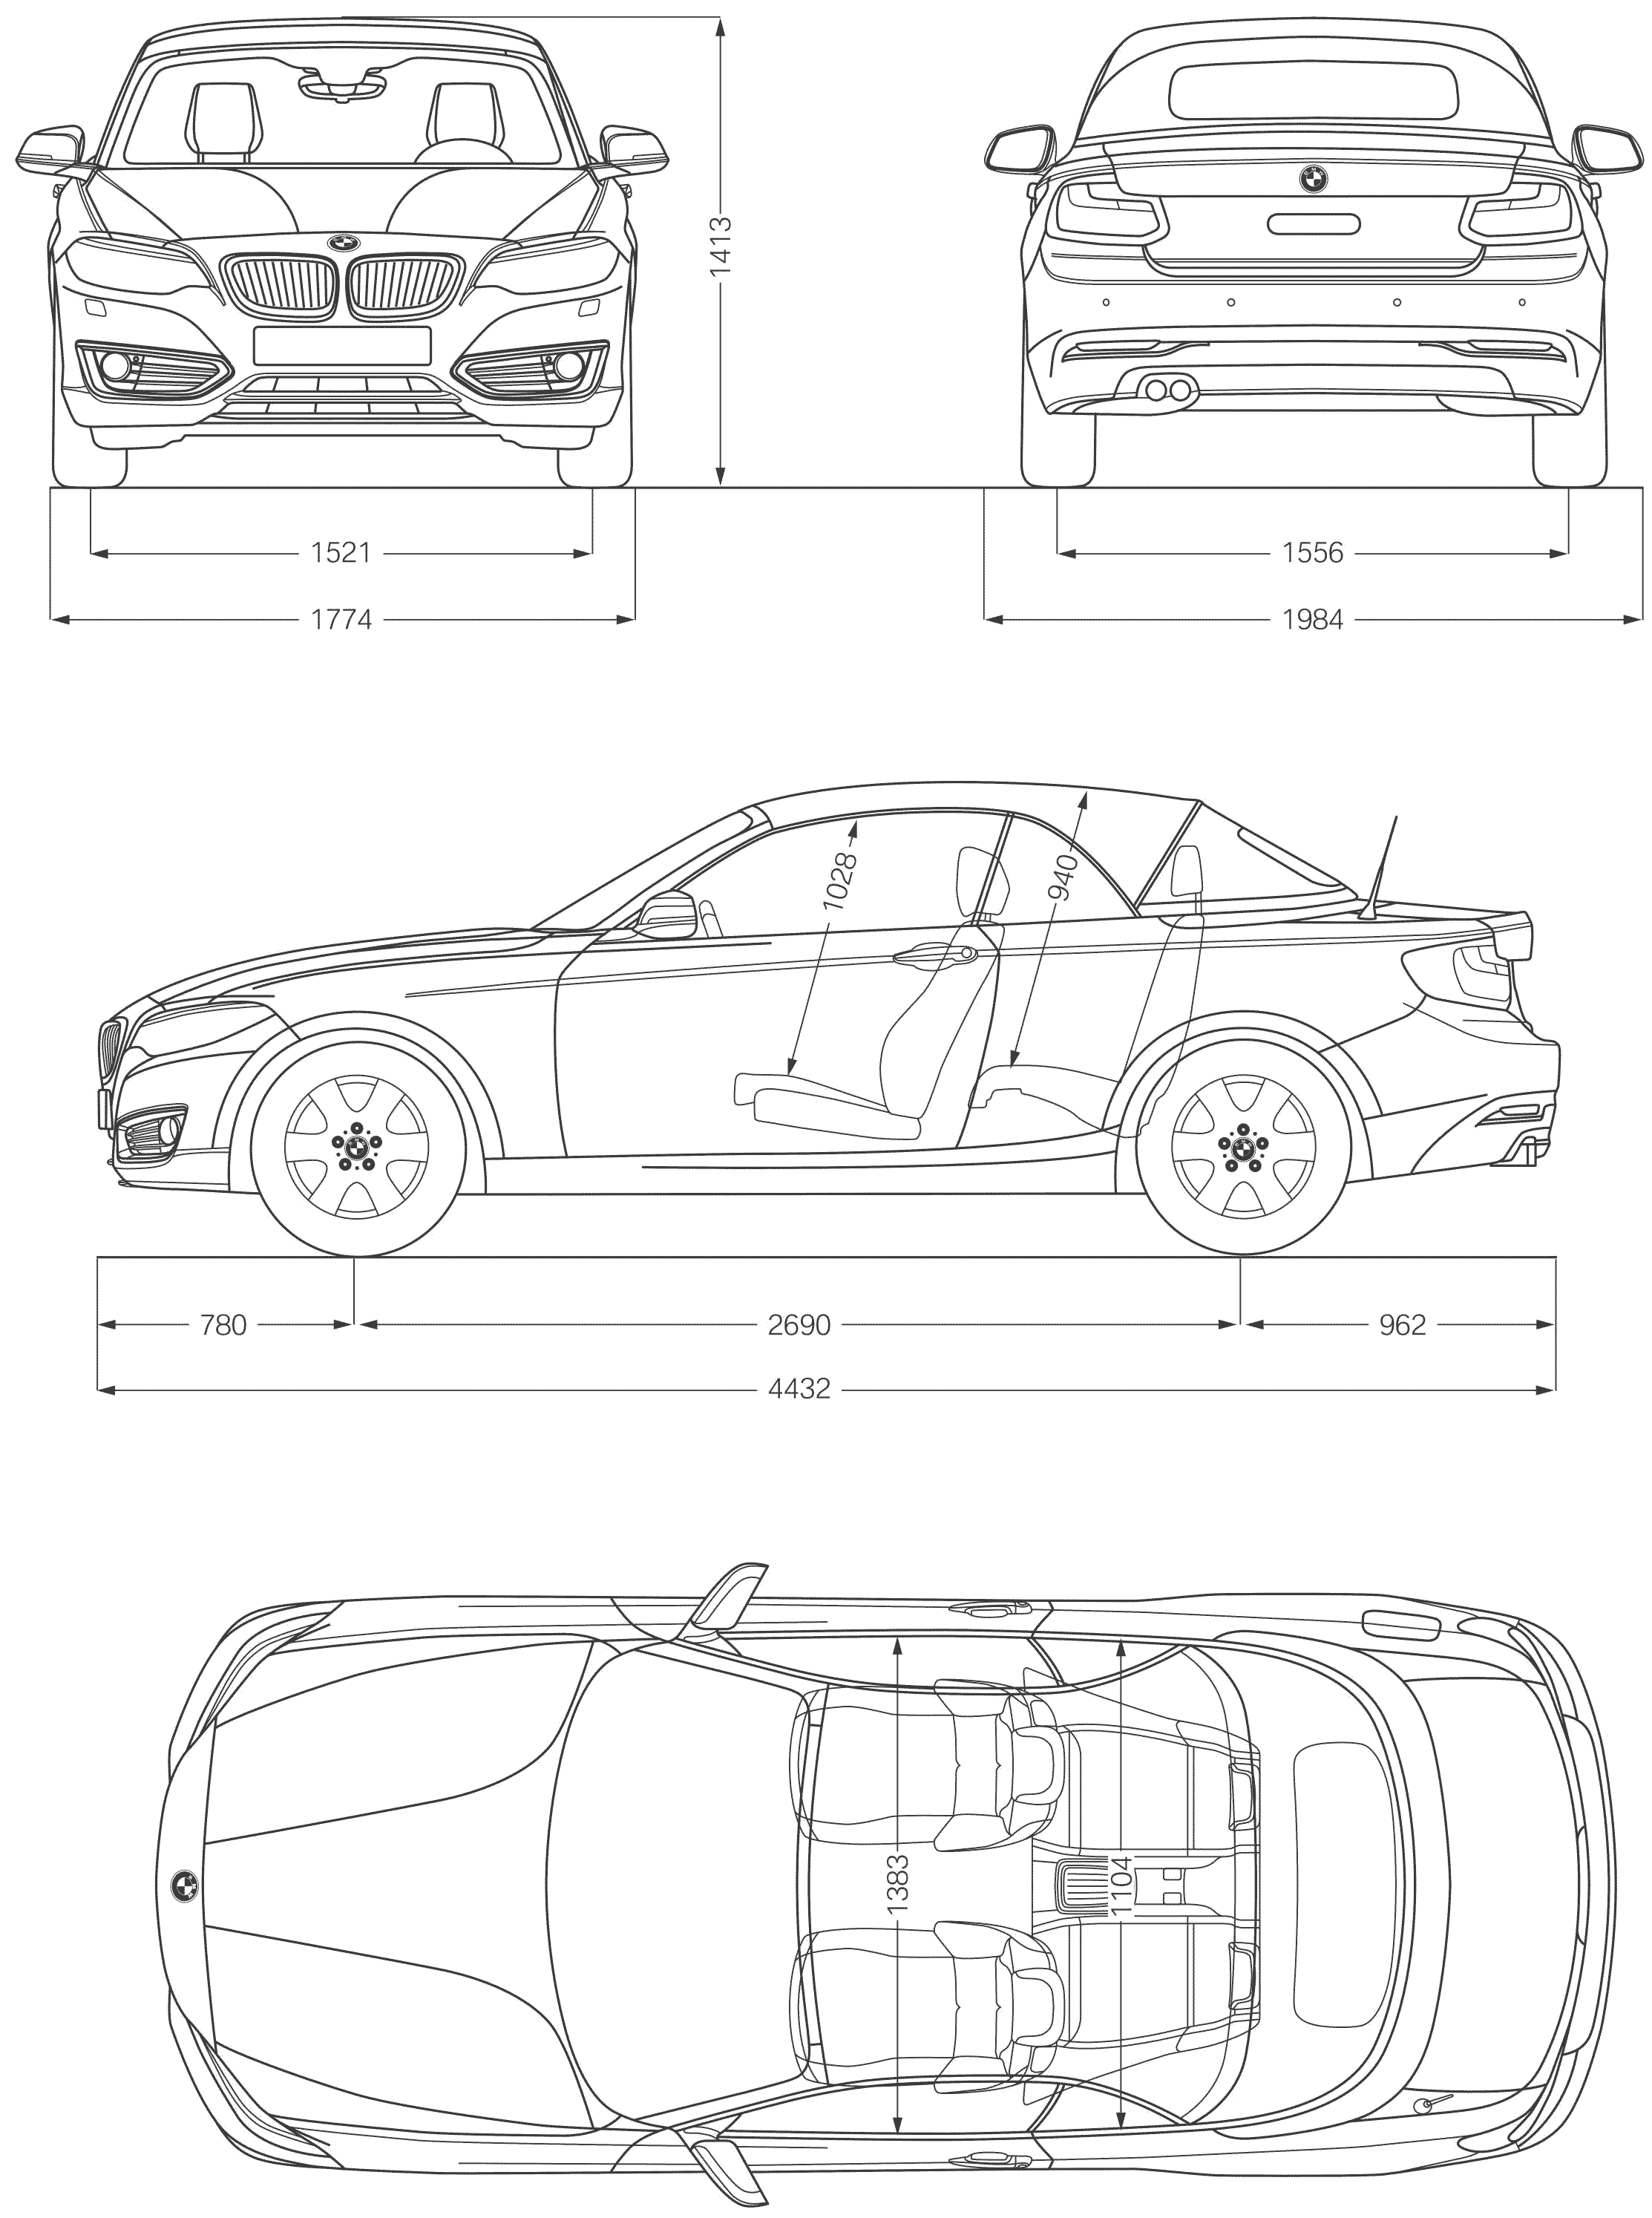 BMW 2-series blueprint